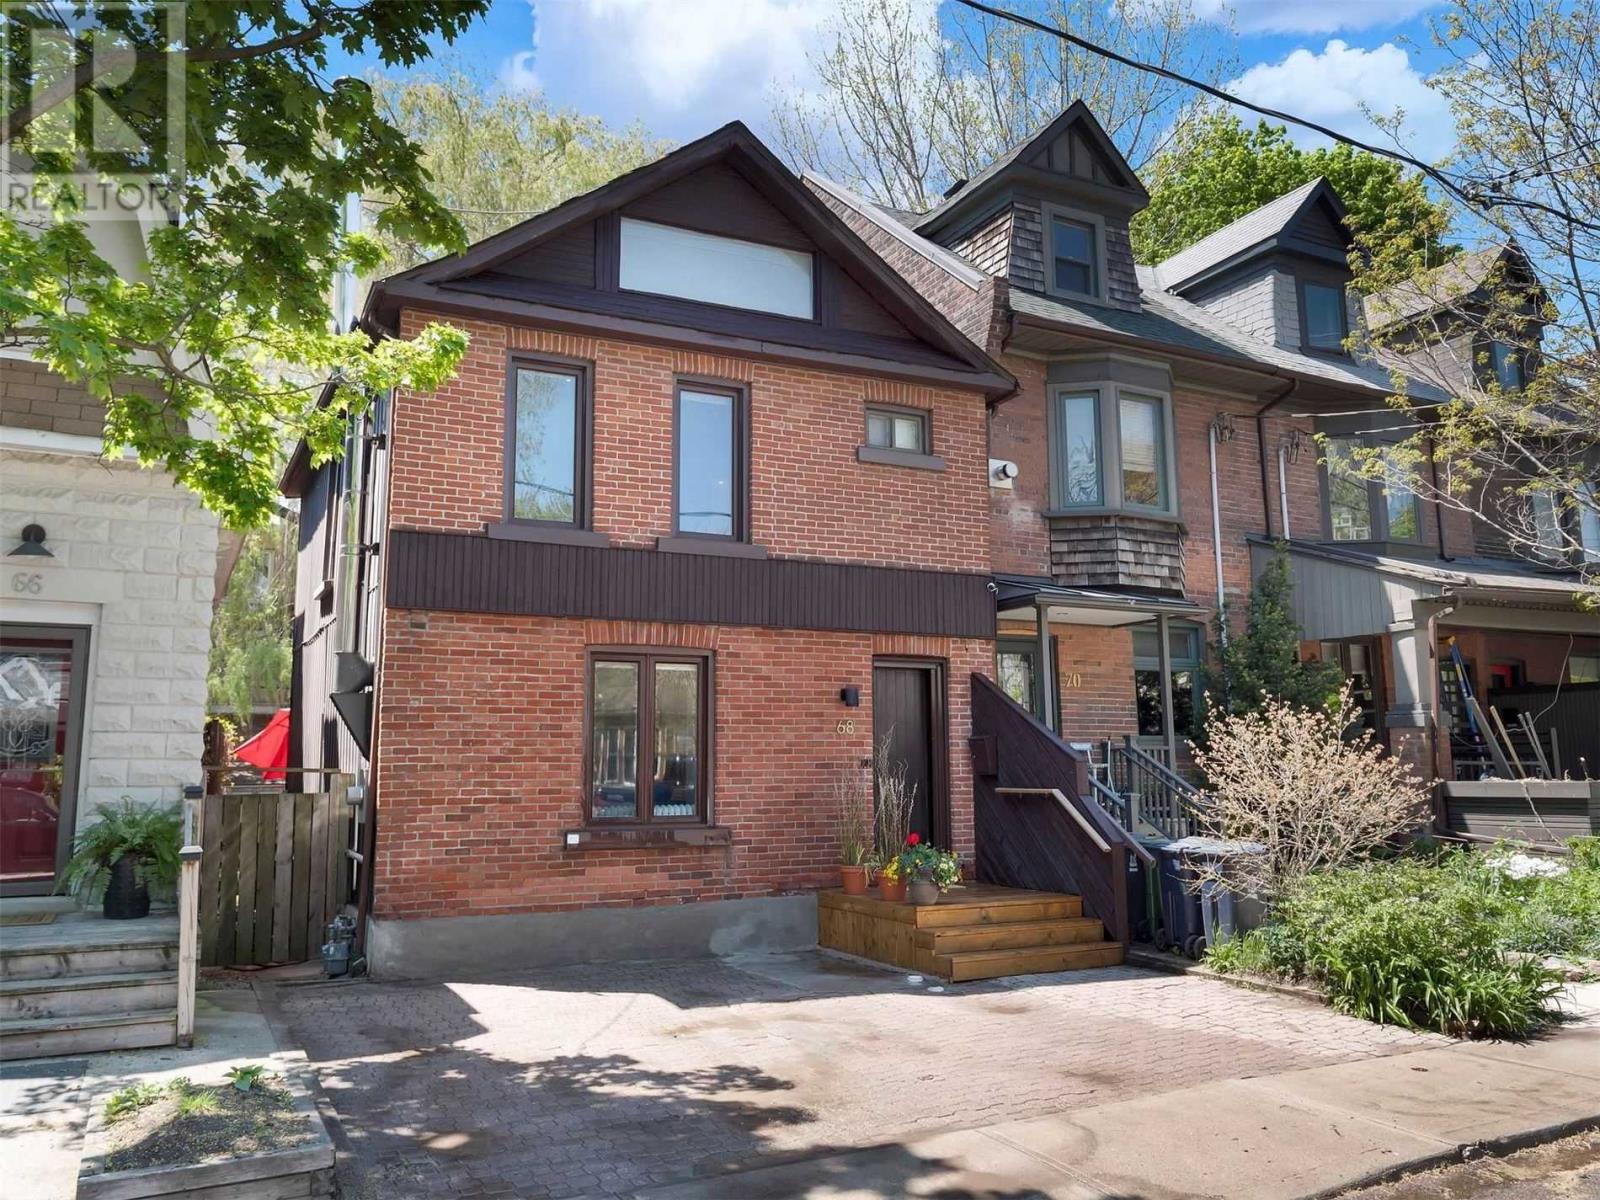 68 WINNIFRED AVE, Toronto, Ontario, M4M2X3 - New Era Real Estate